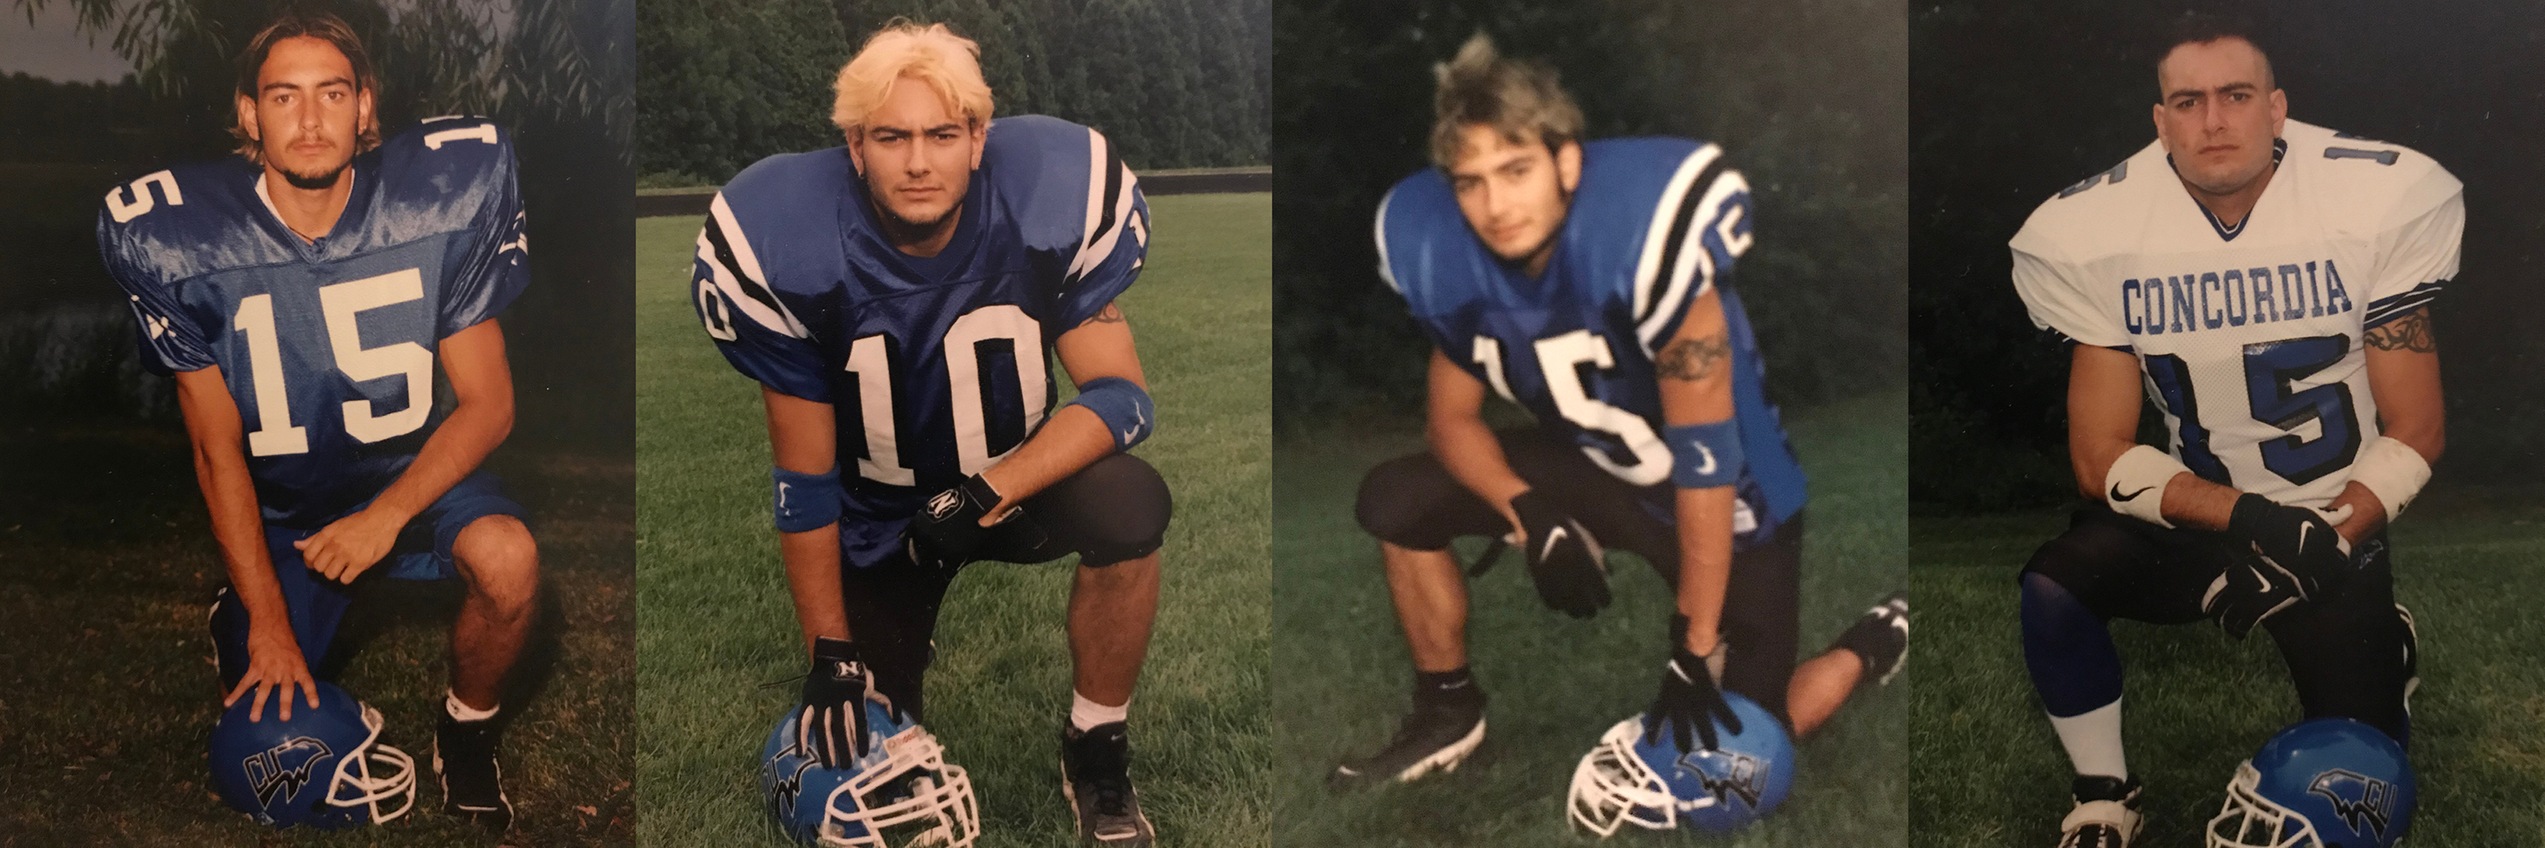 Dobson as a Freshman (1996), Sophomore (1997), Junior (1998), and Senior (1999)